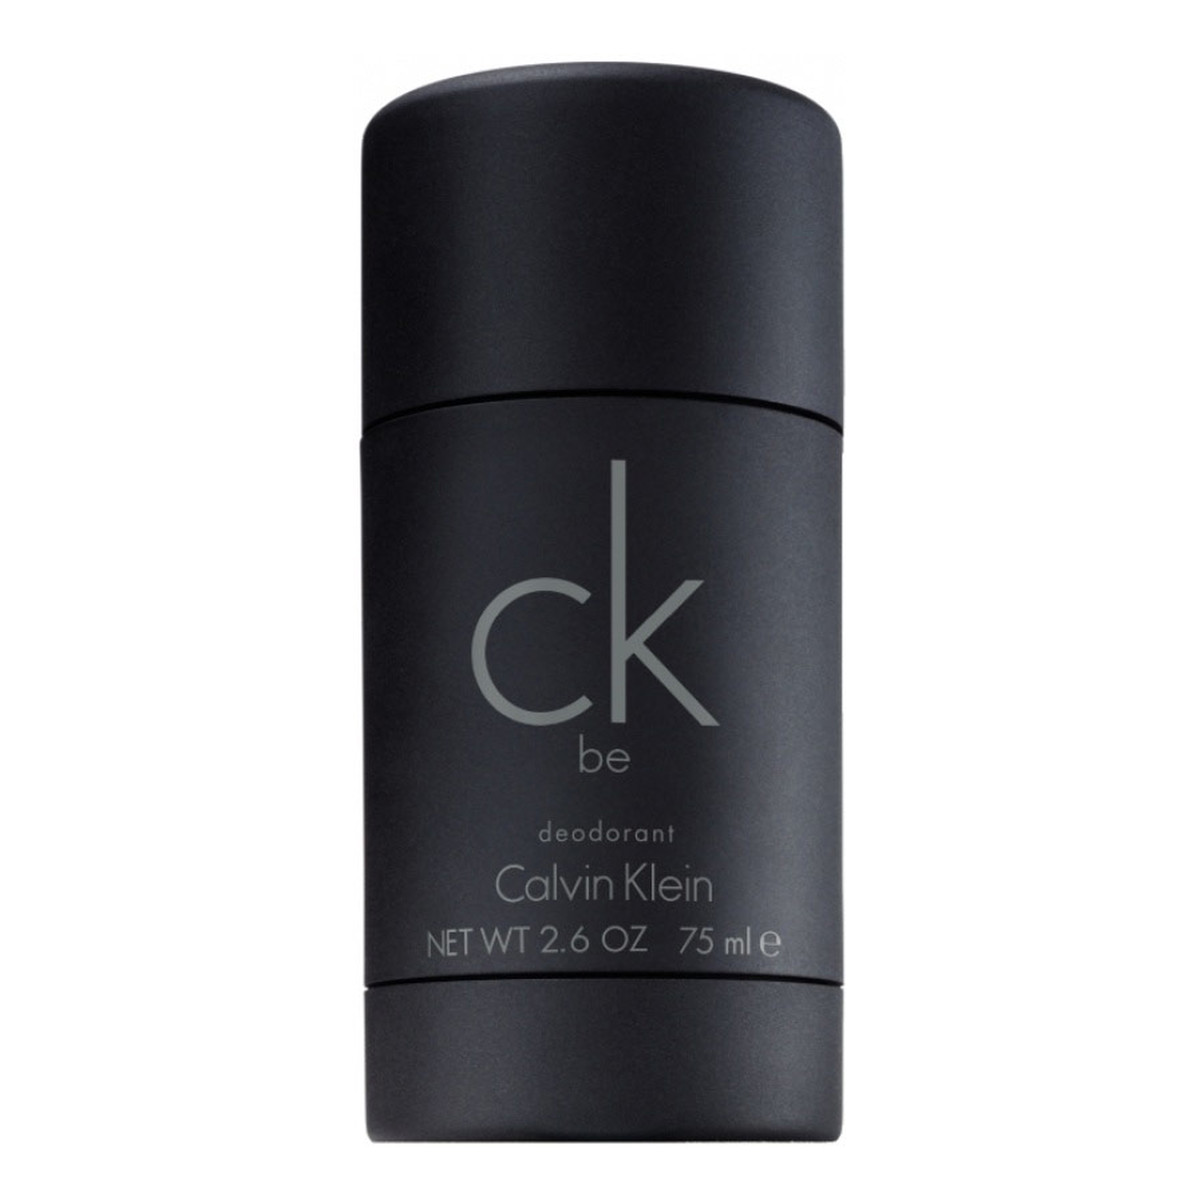 Calvin Klein CK Be Dezodorant sztyft 75ml